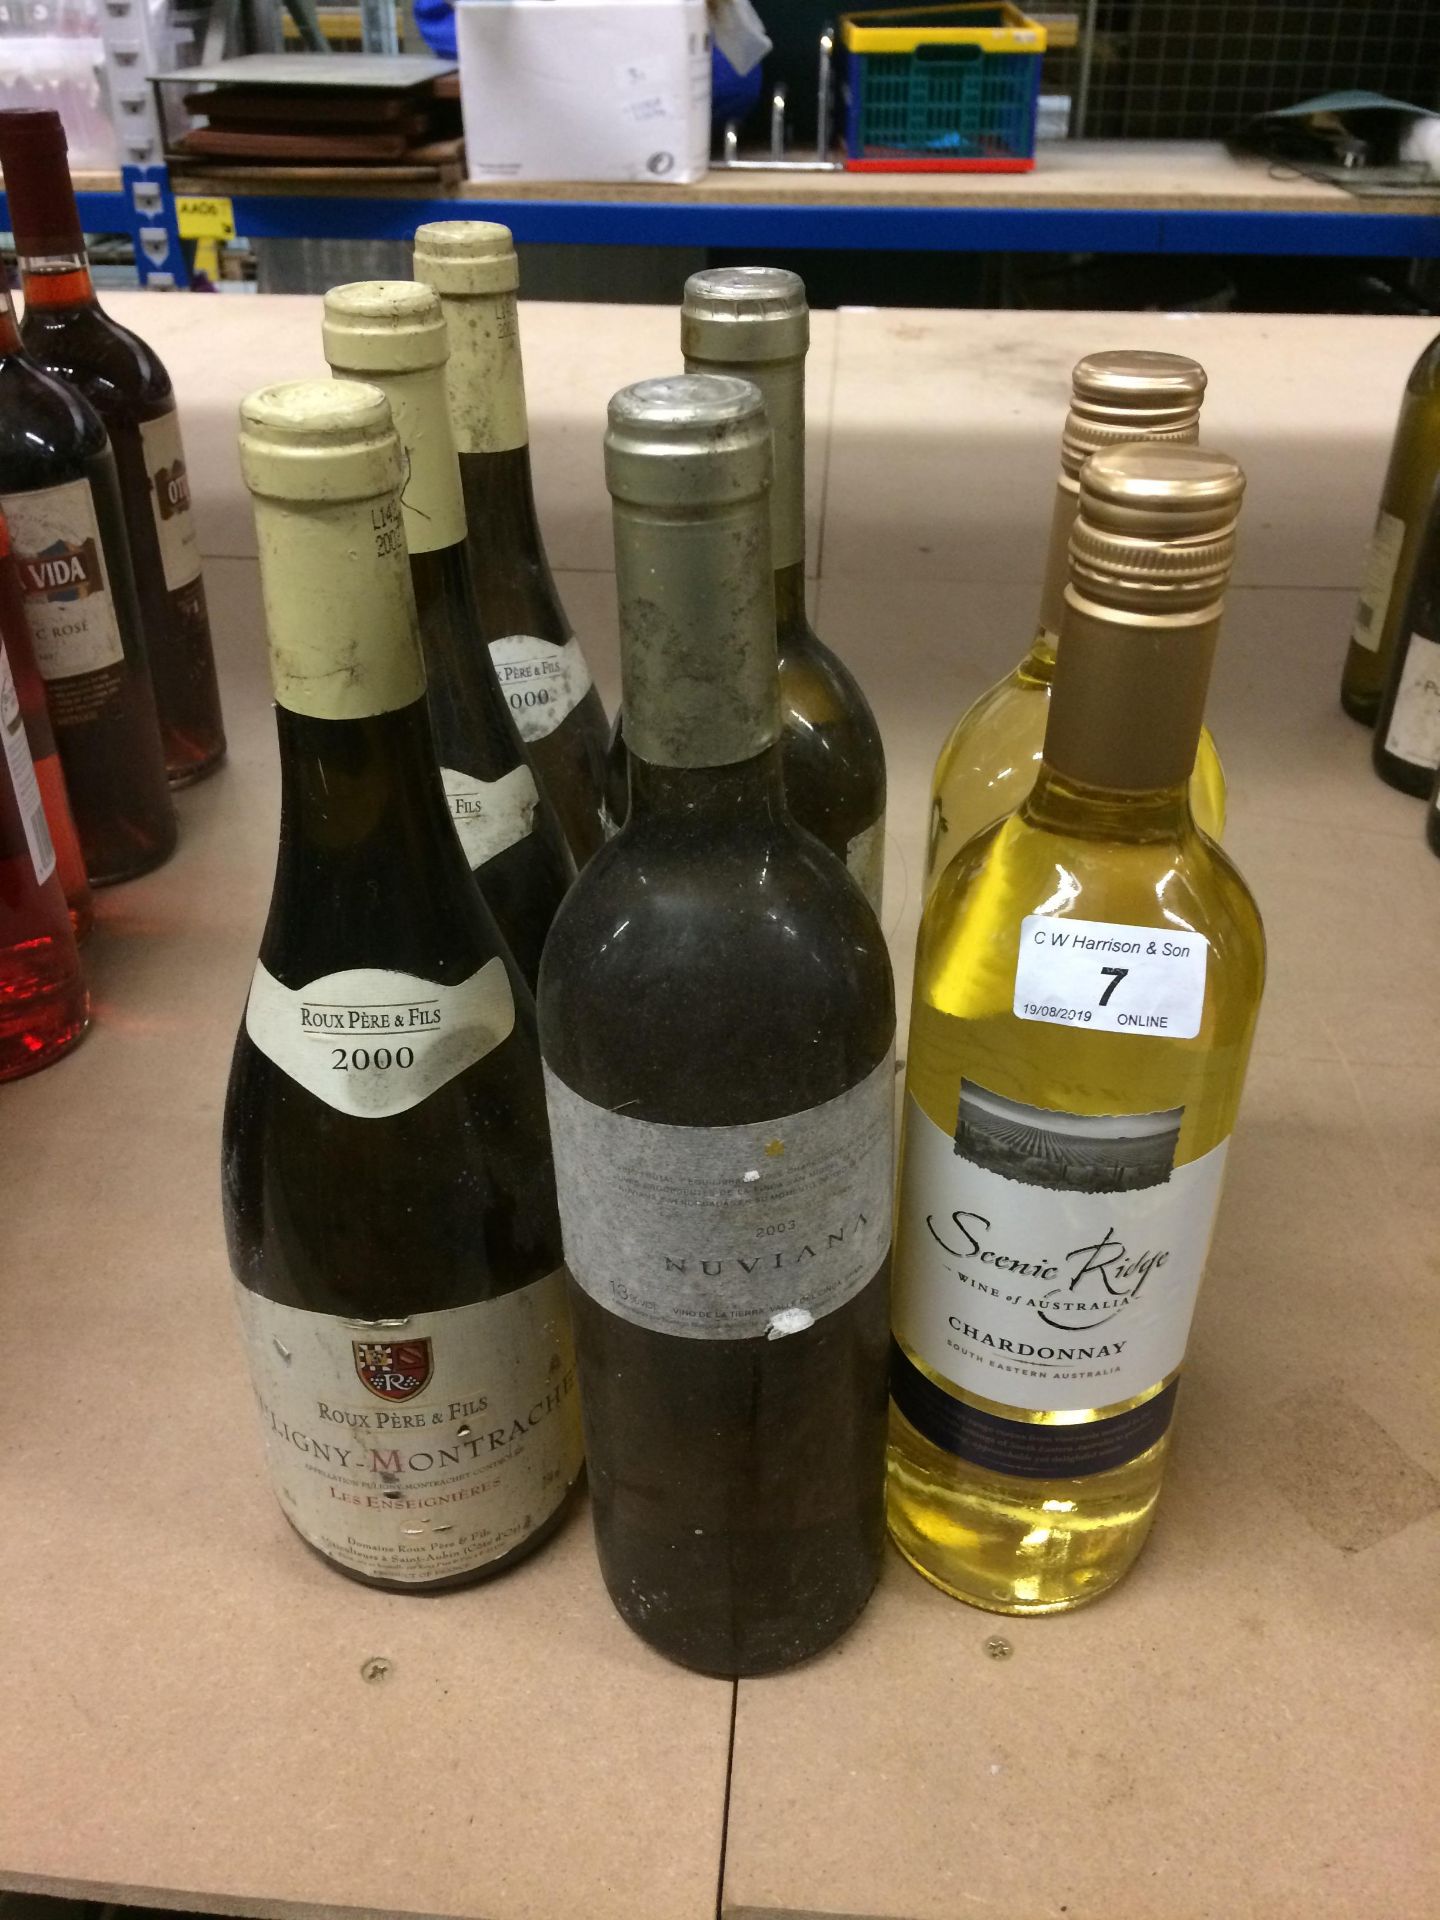 7 x items - 75cl bottles of Scenic Ridge Chardonnay wine,